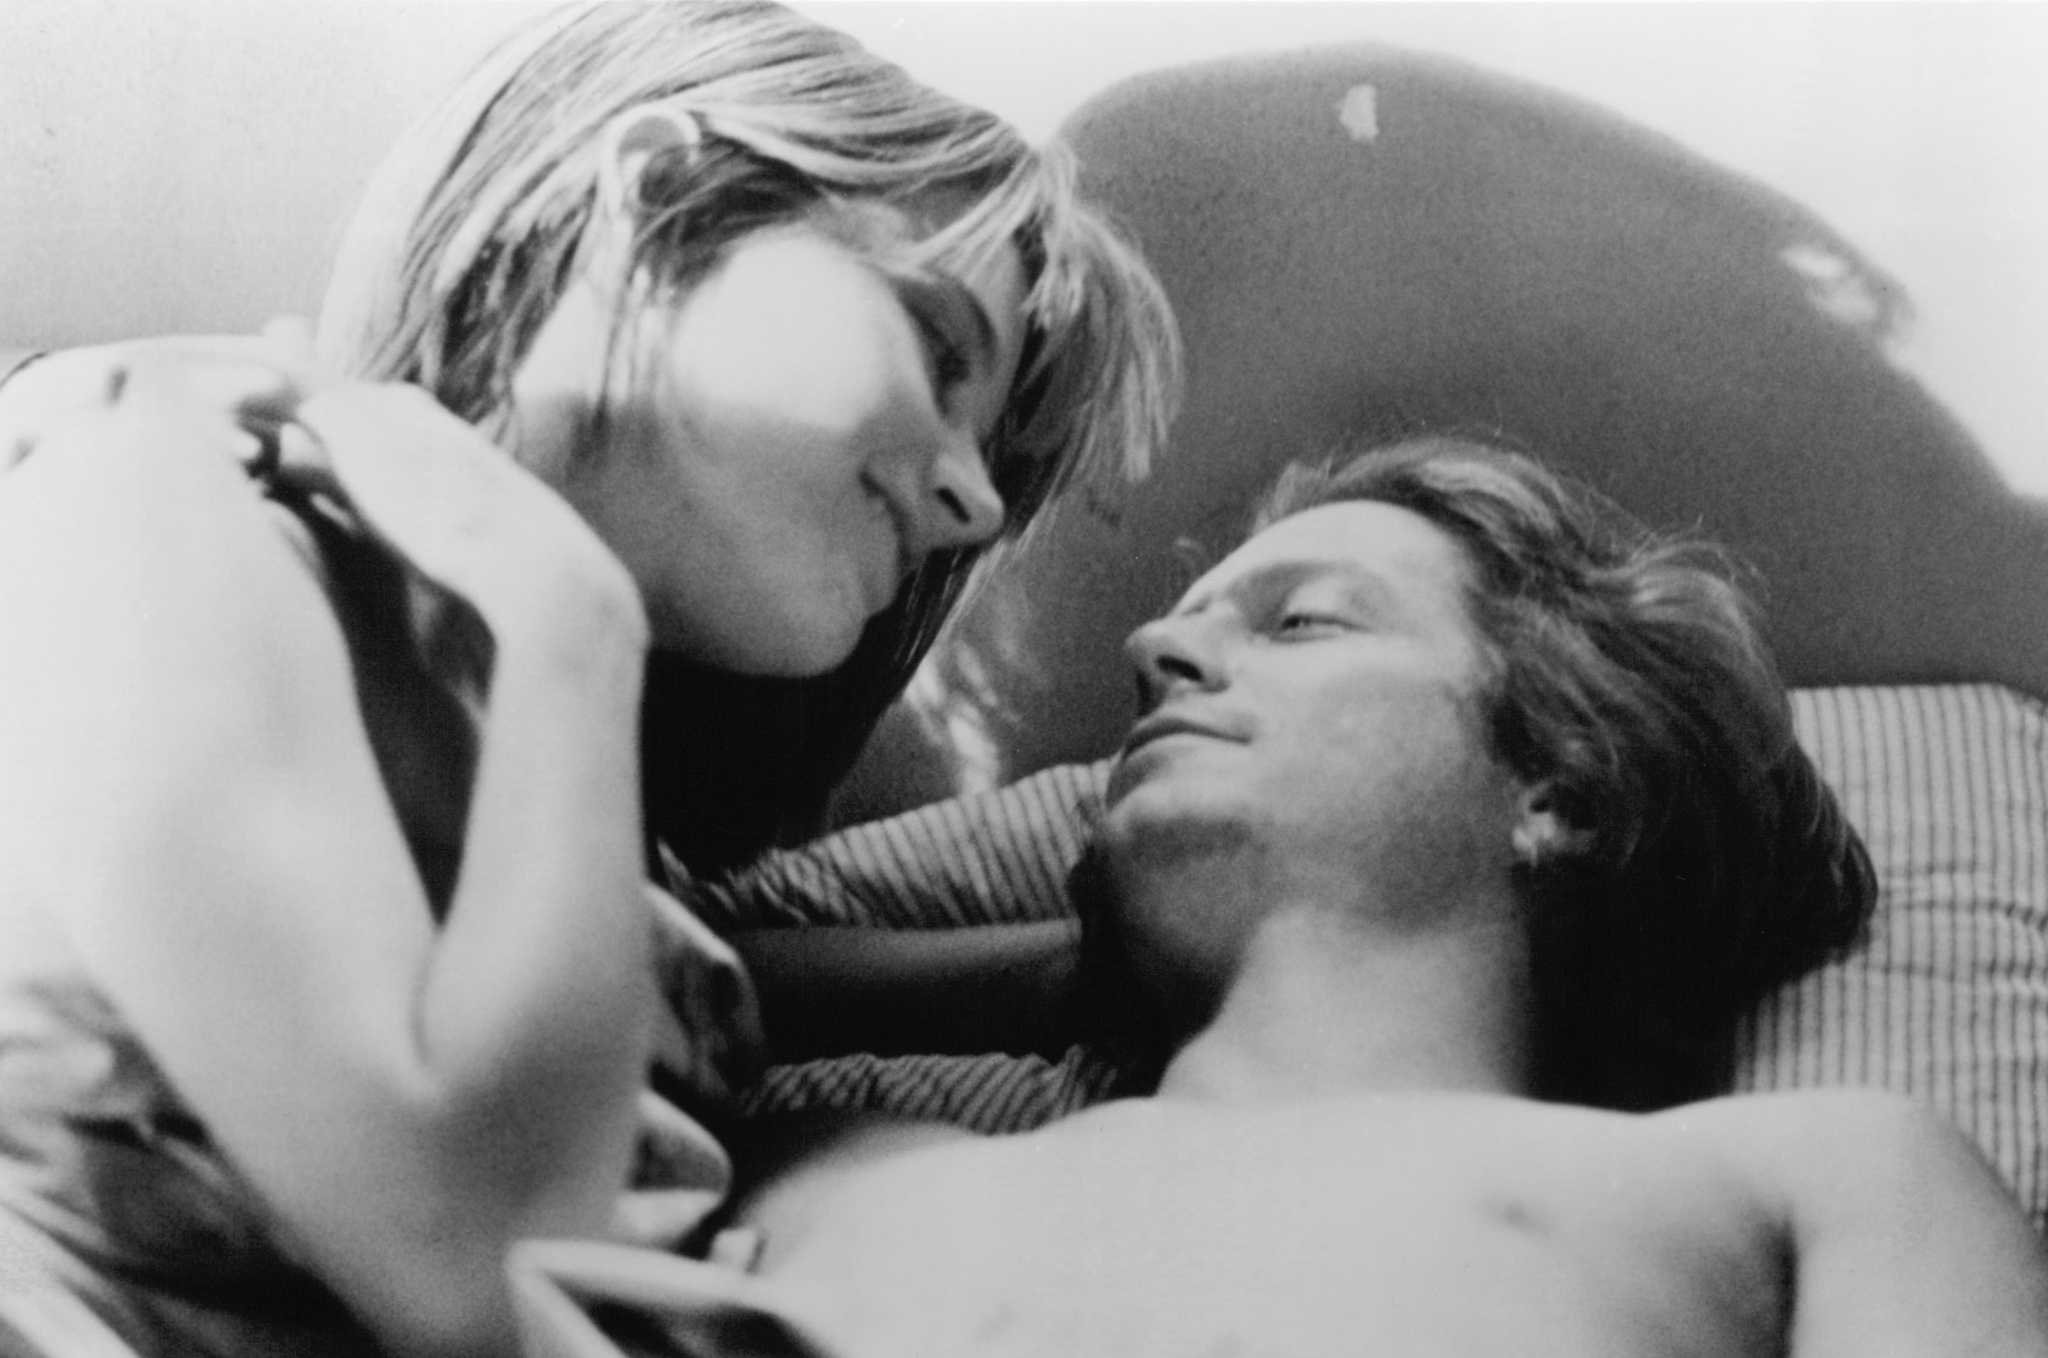 Still of Bridget Fonda and Eric Stoltz in Bodies, Rest & Motion (1993)